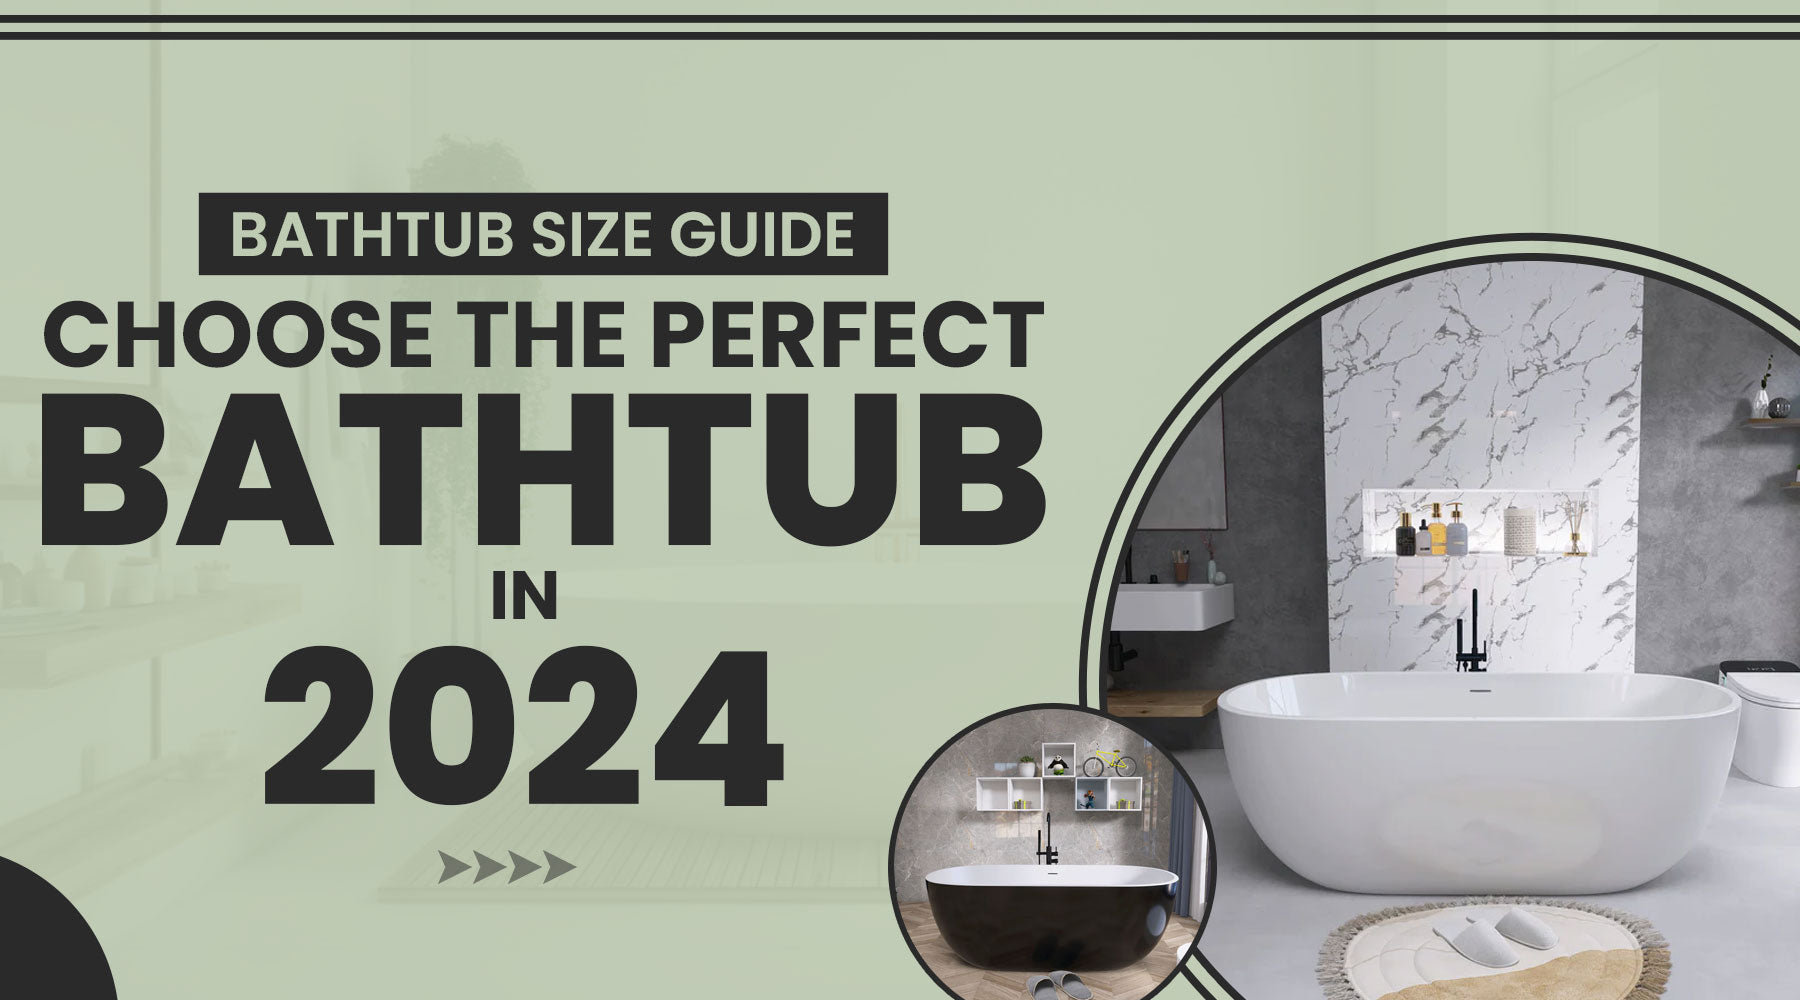 Bathtub Size Guide: Choose the Perfect Bathtub in 2024